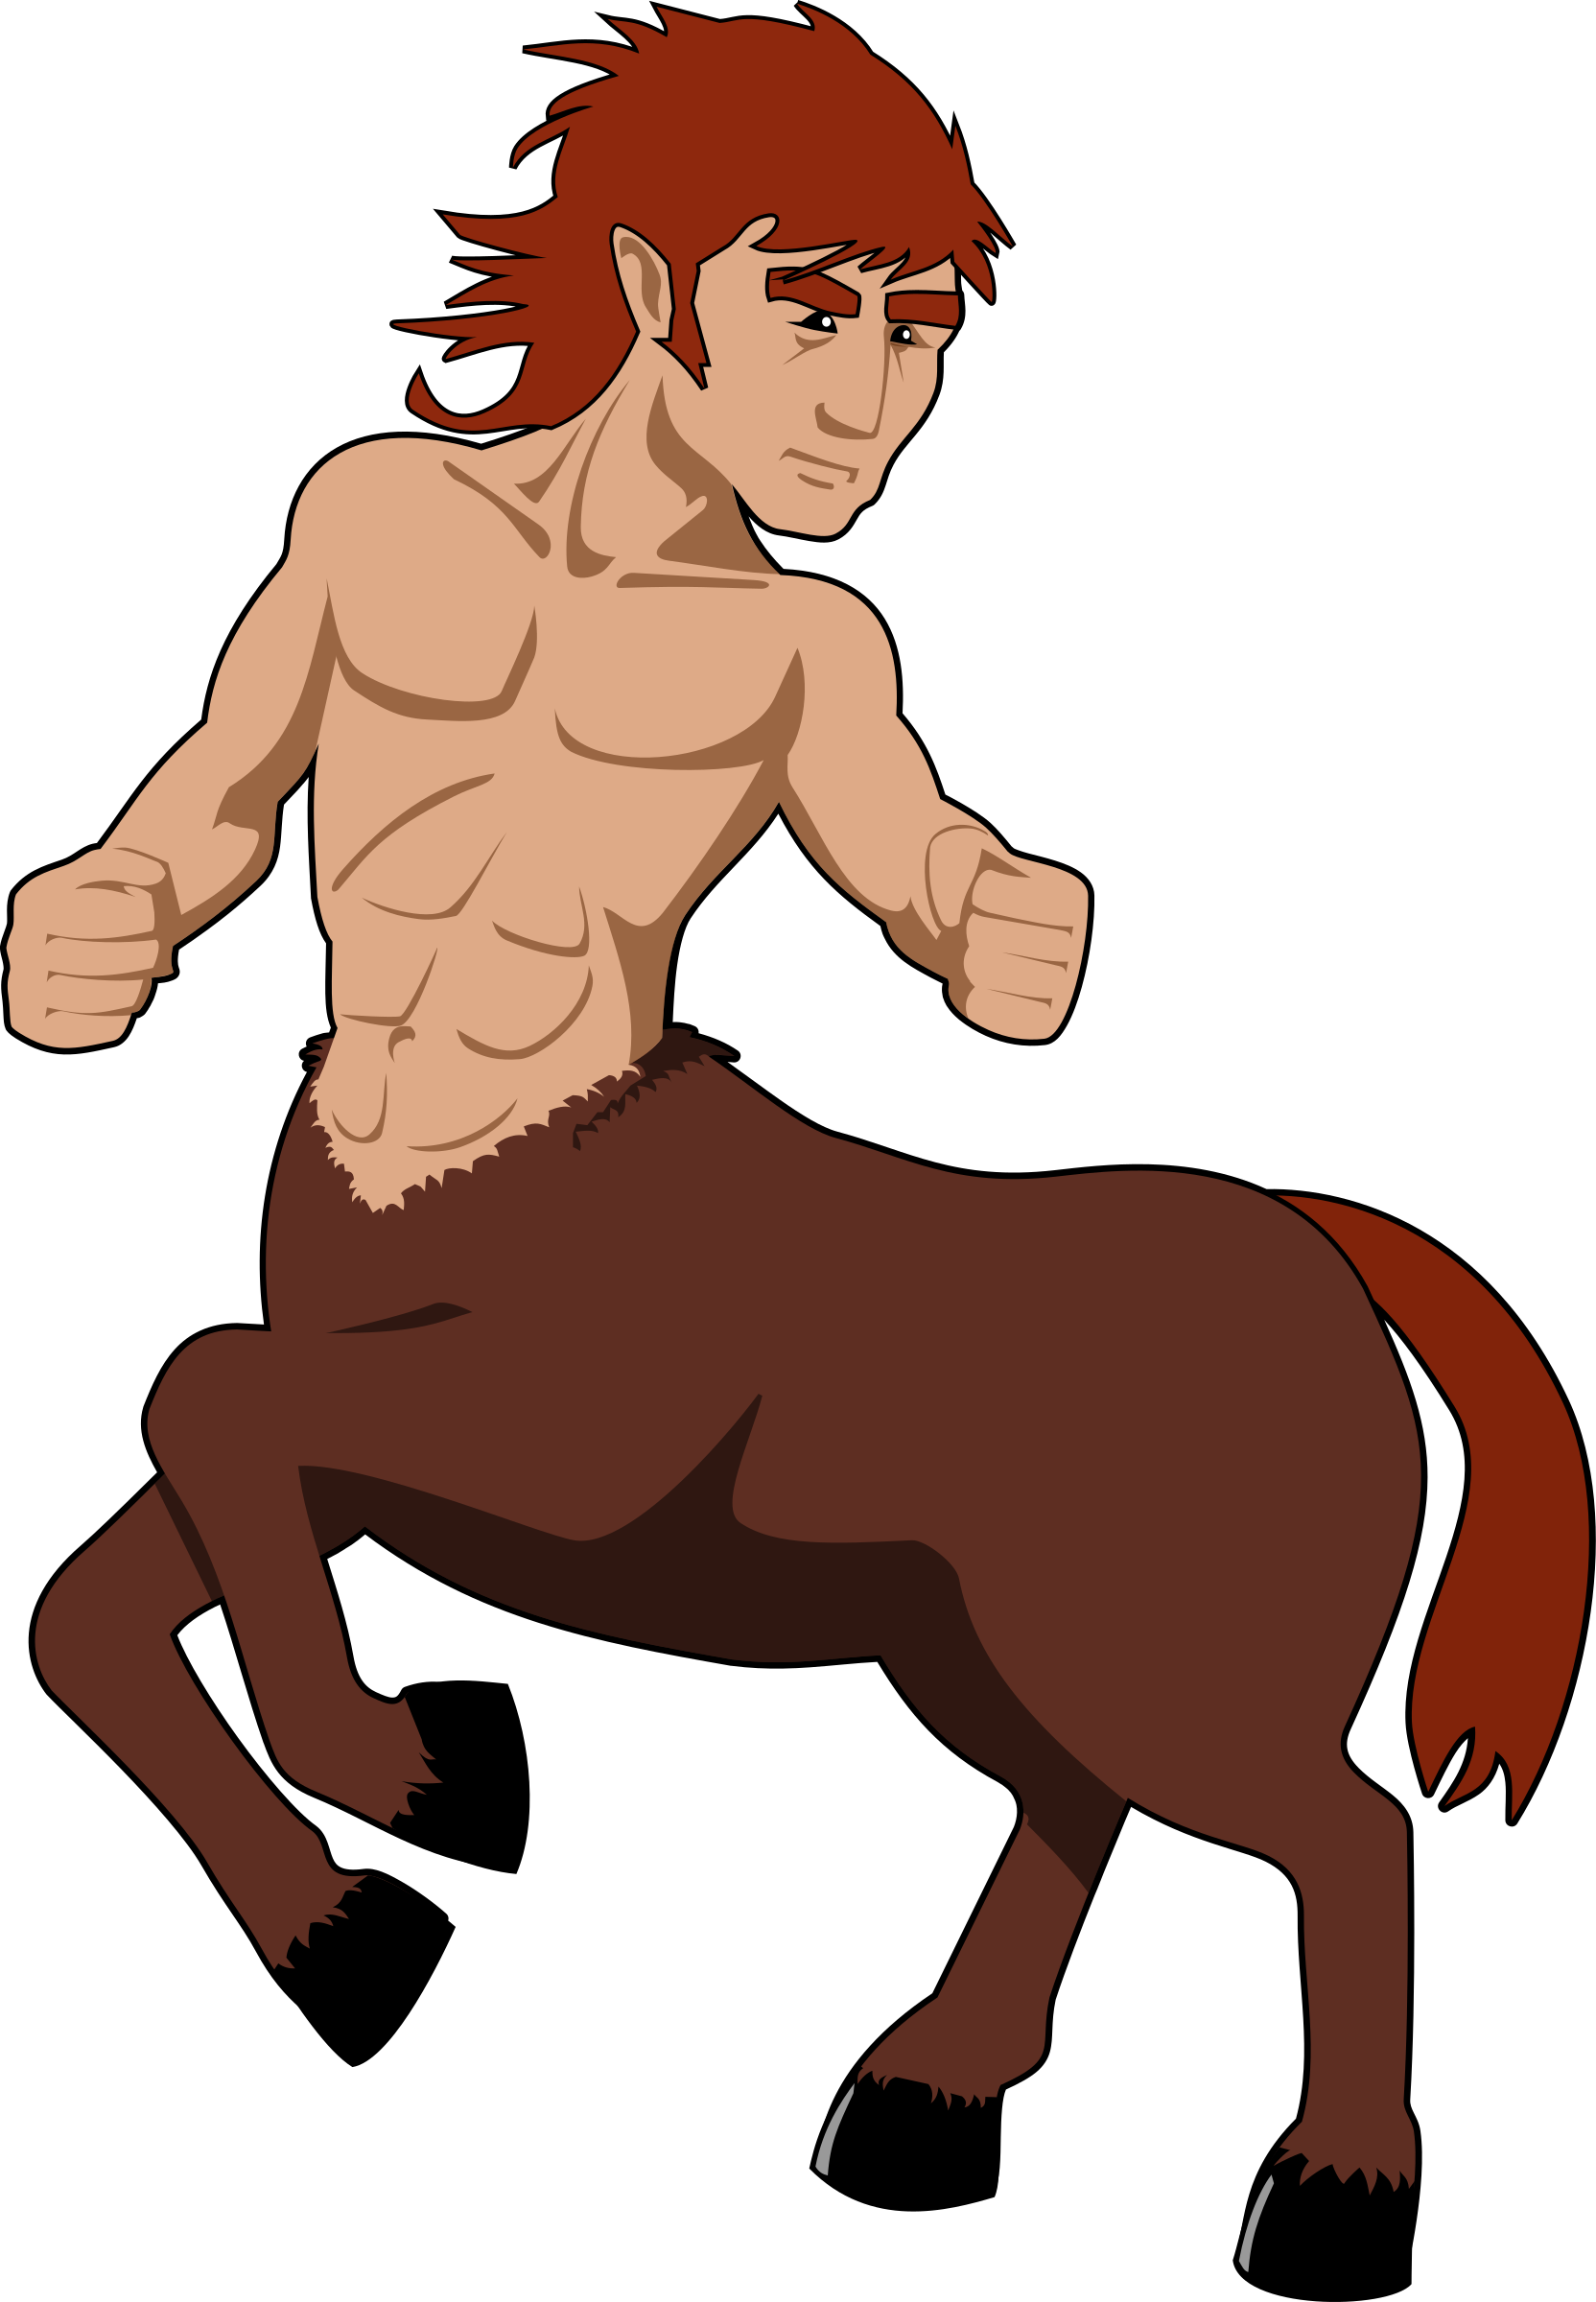 Redhead - Human Body Horse Legs (1664x2400)